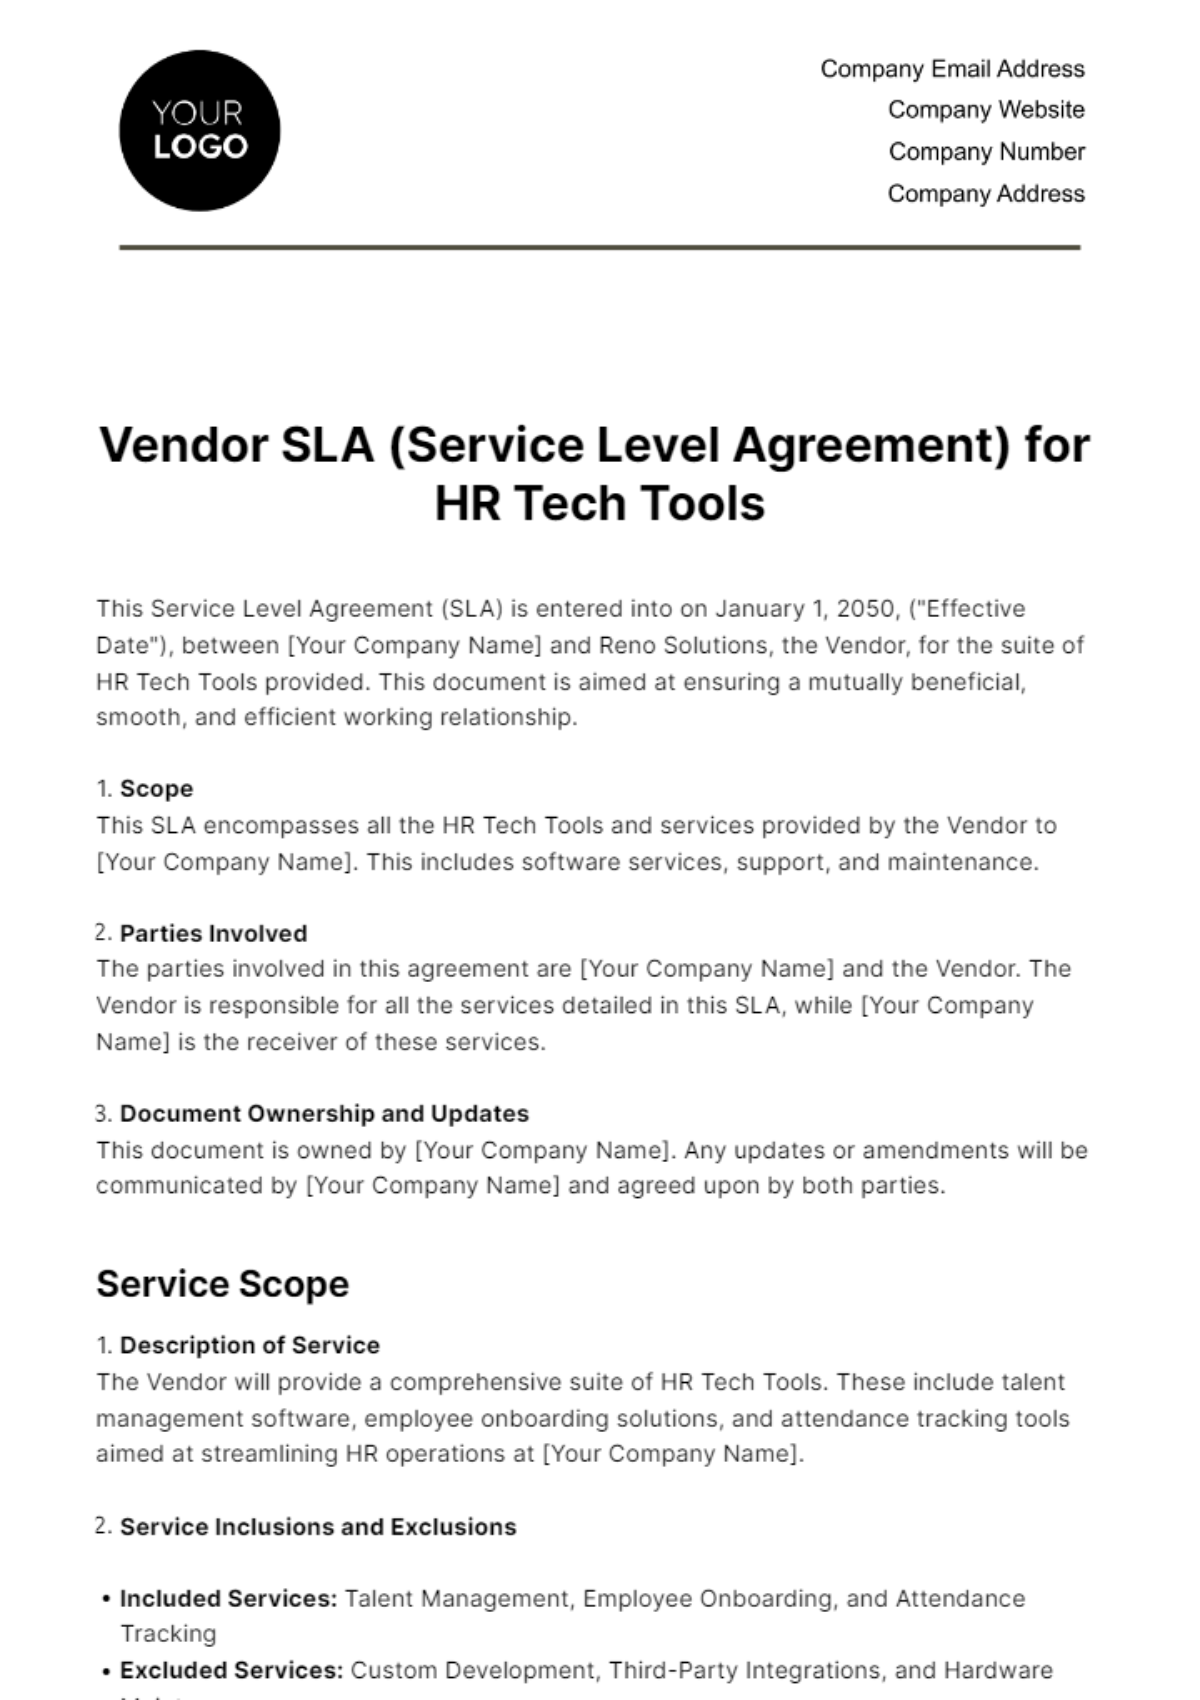 Vendor SLA (Service Level Agreement) for HR Tech Tools Template